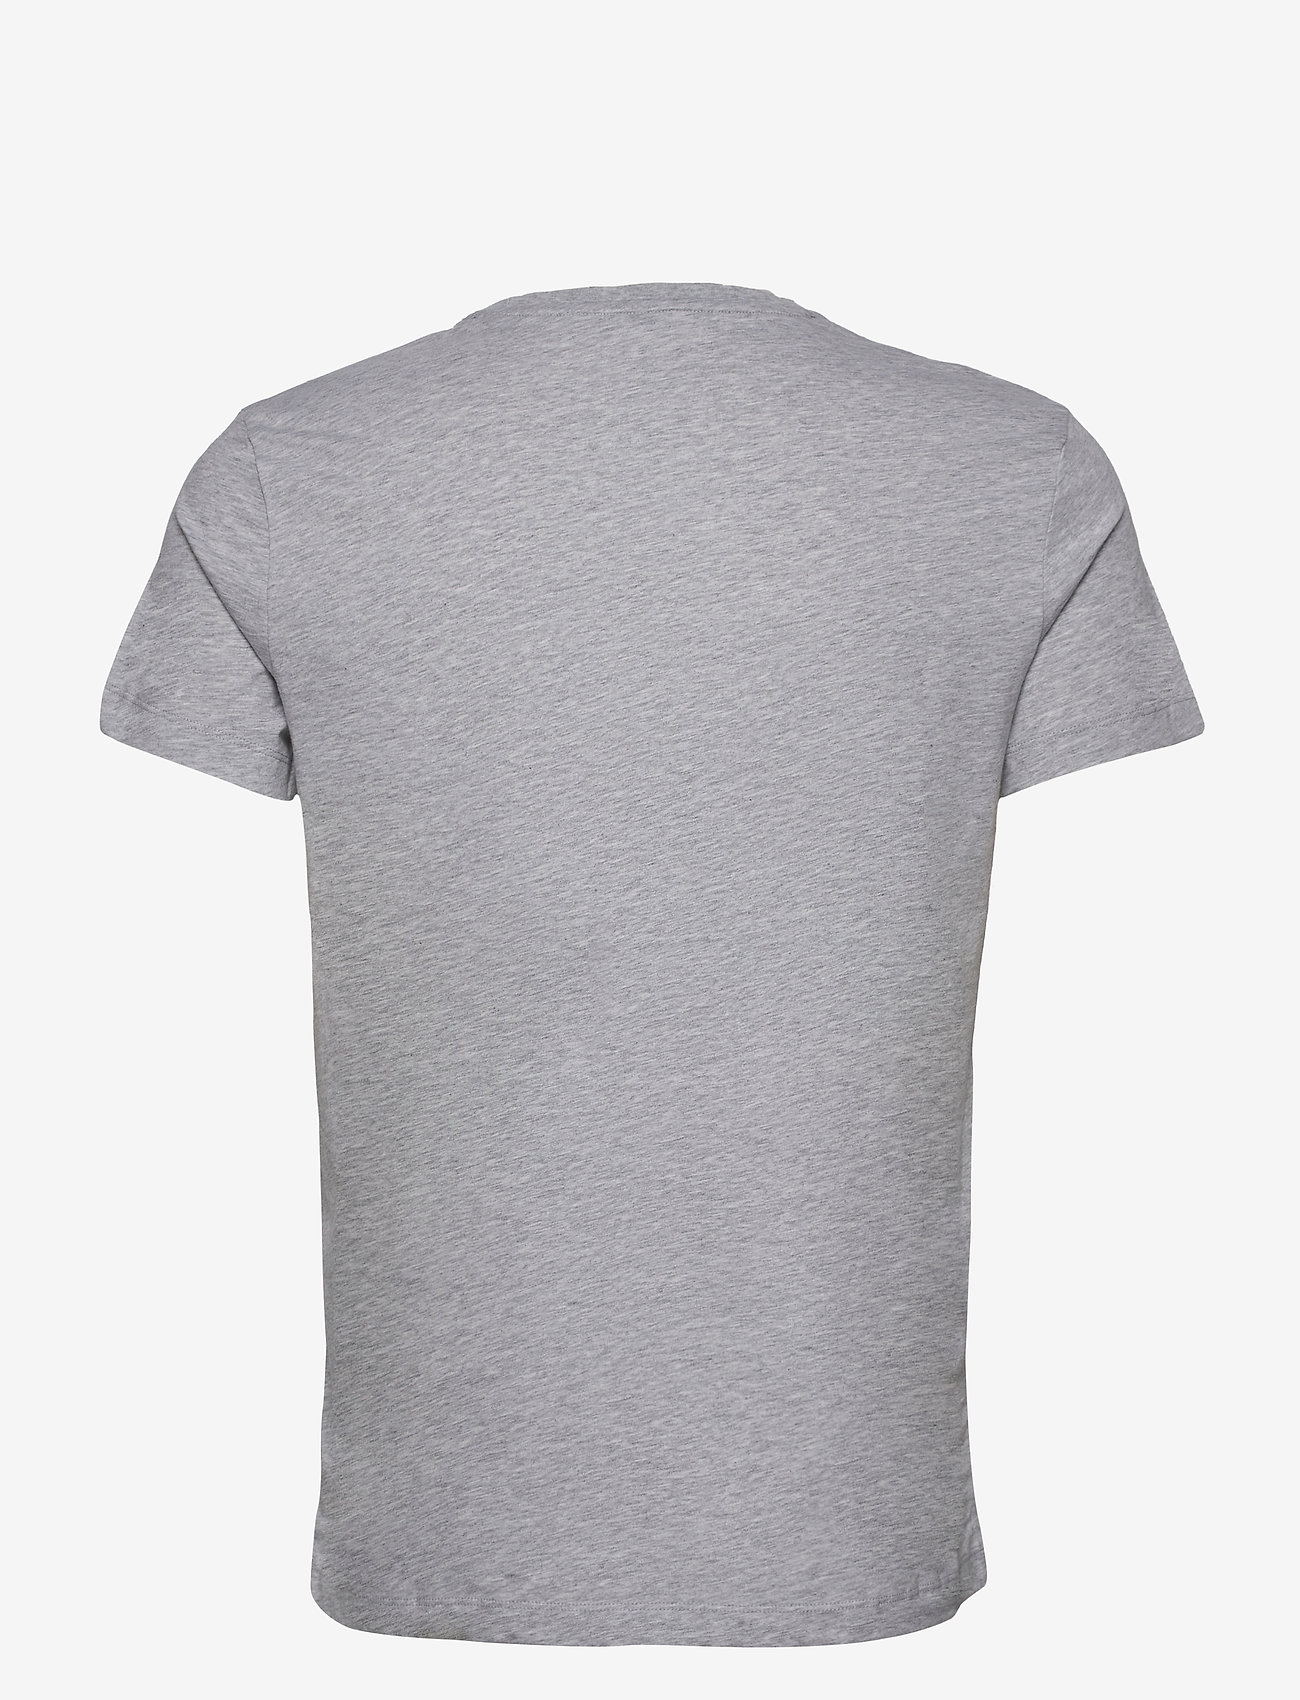 Björn Borg - CENTRE T-SHIRT - t-shirts - light grey melange - 1